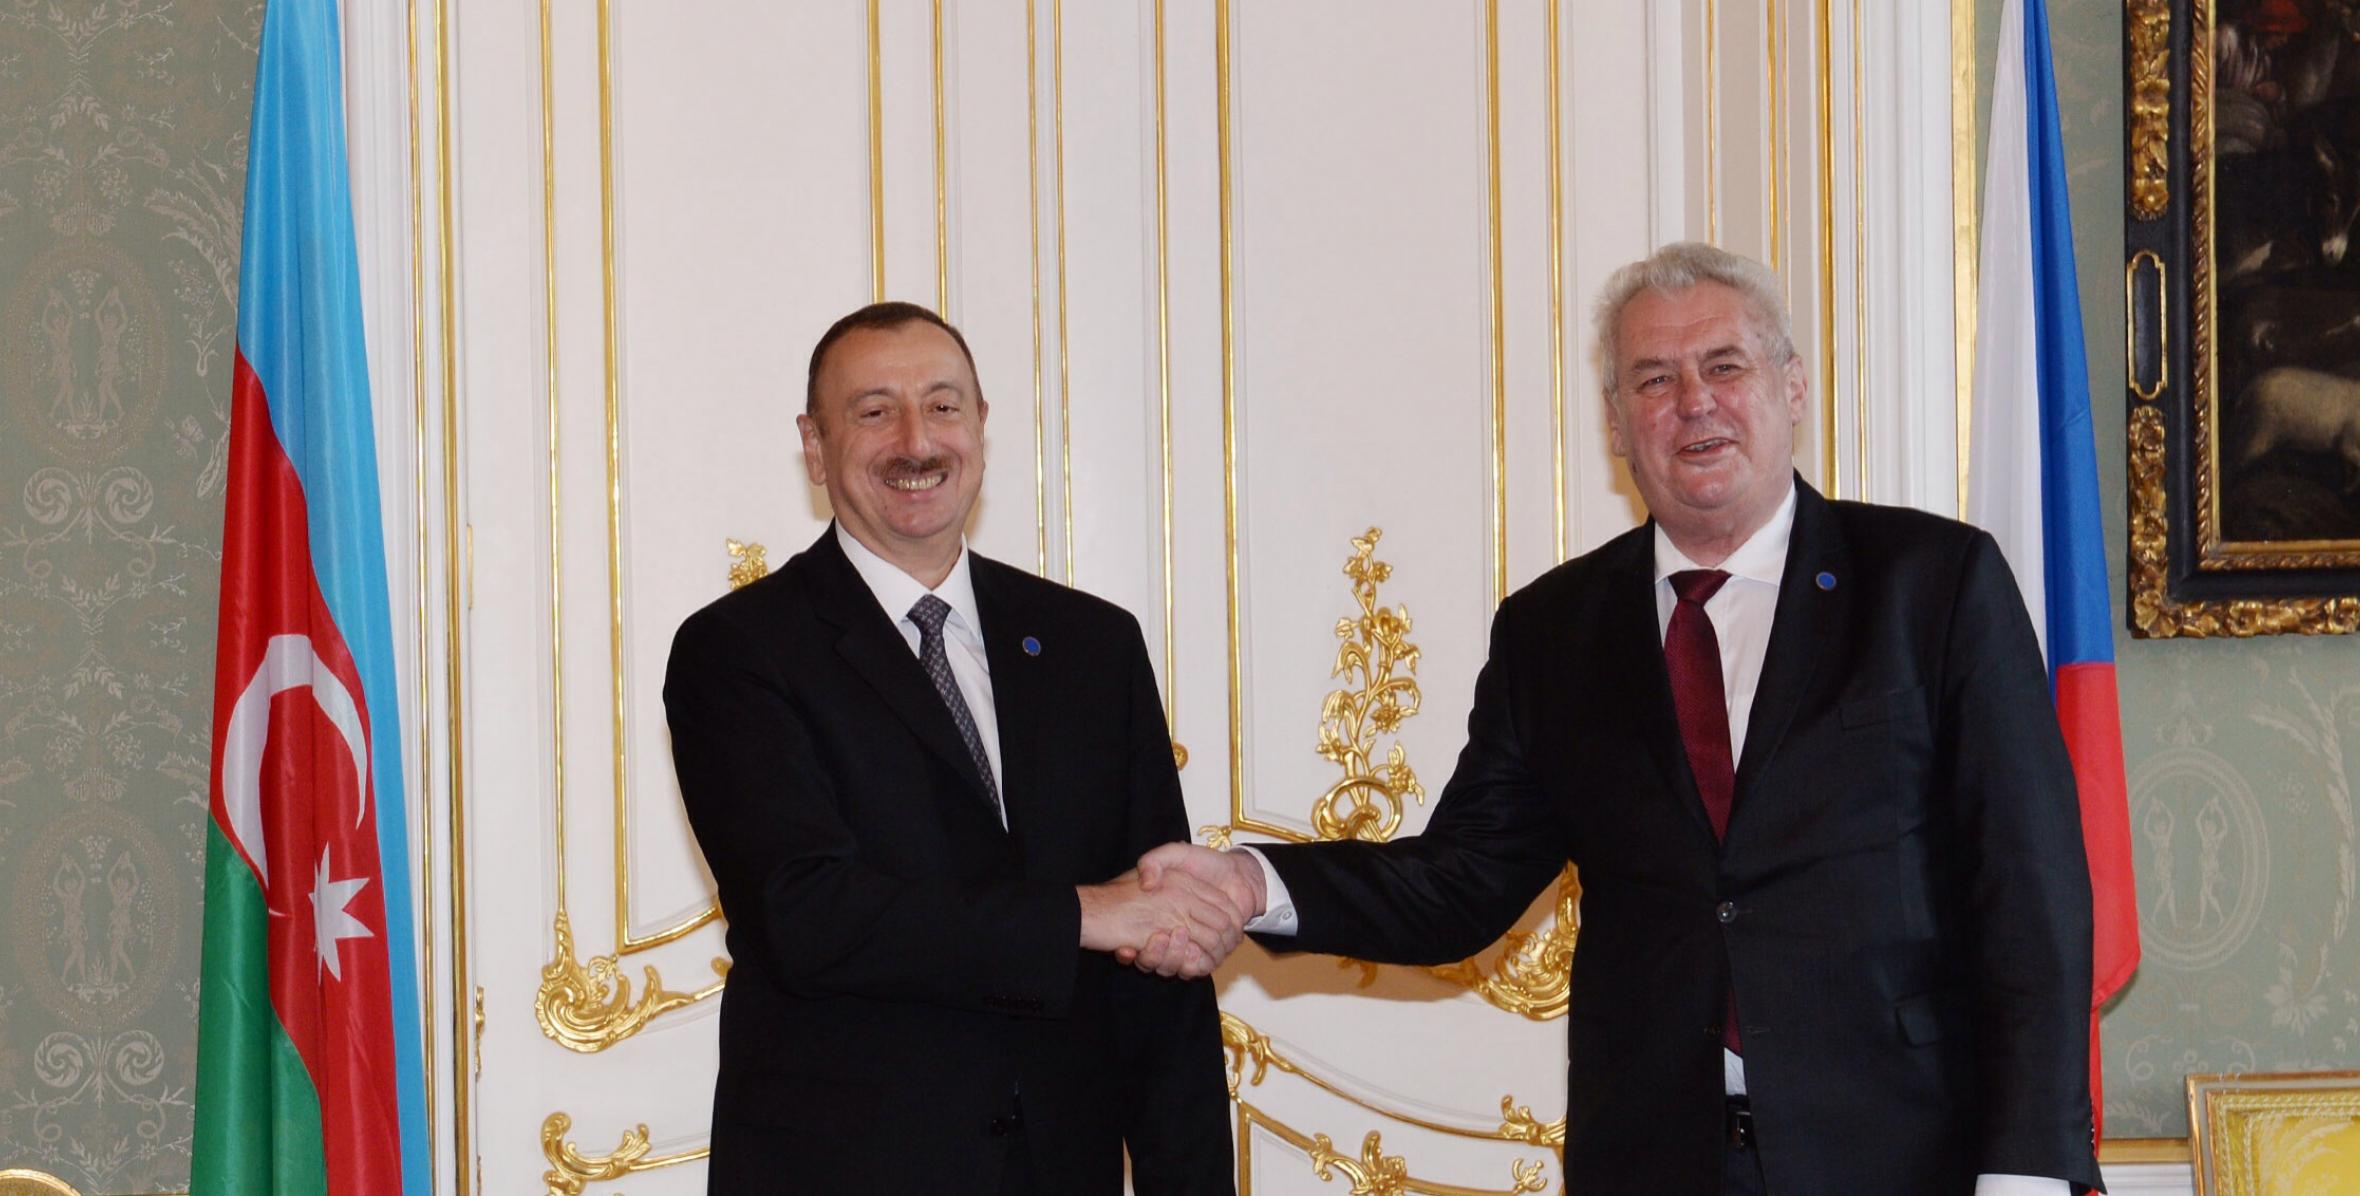 Ilham Aliyev met President of the Czech Republic Milos Zeman in Prague